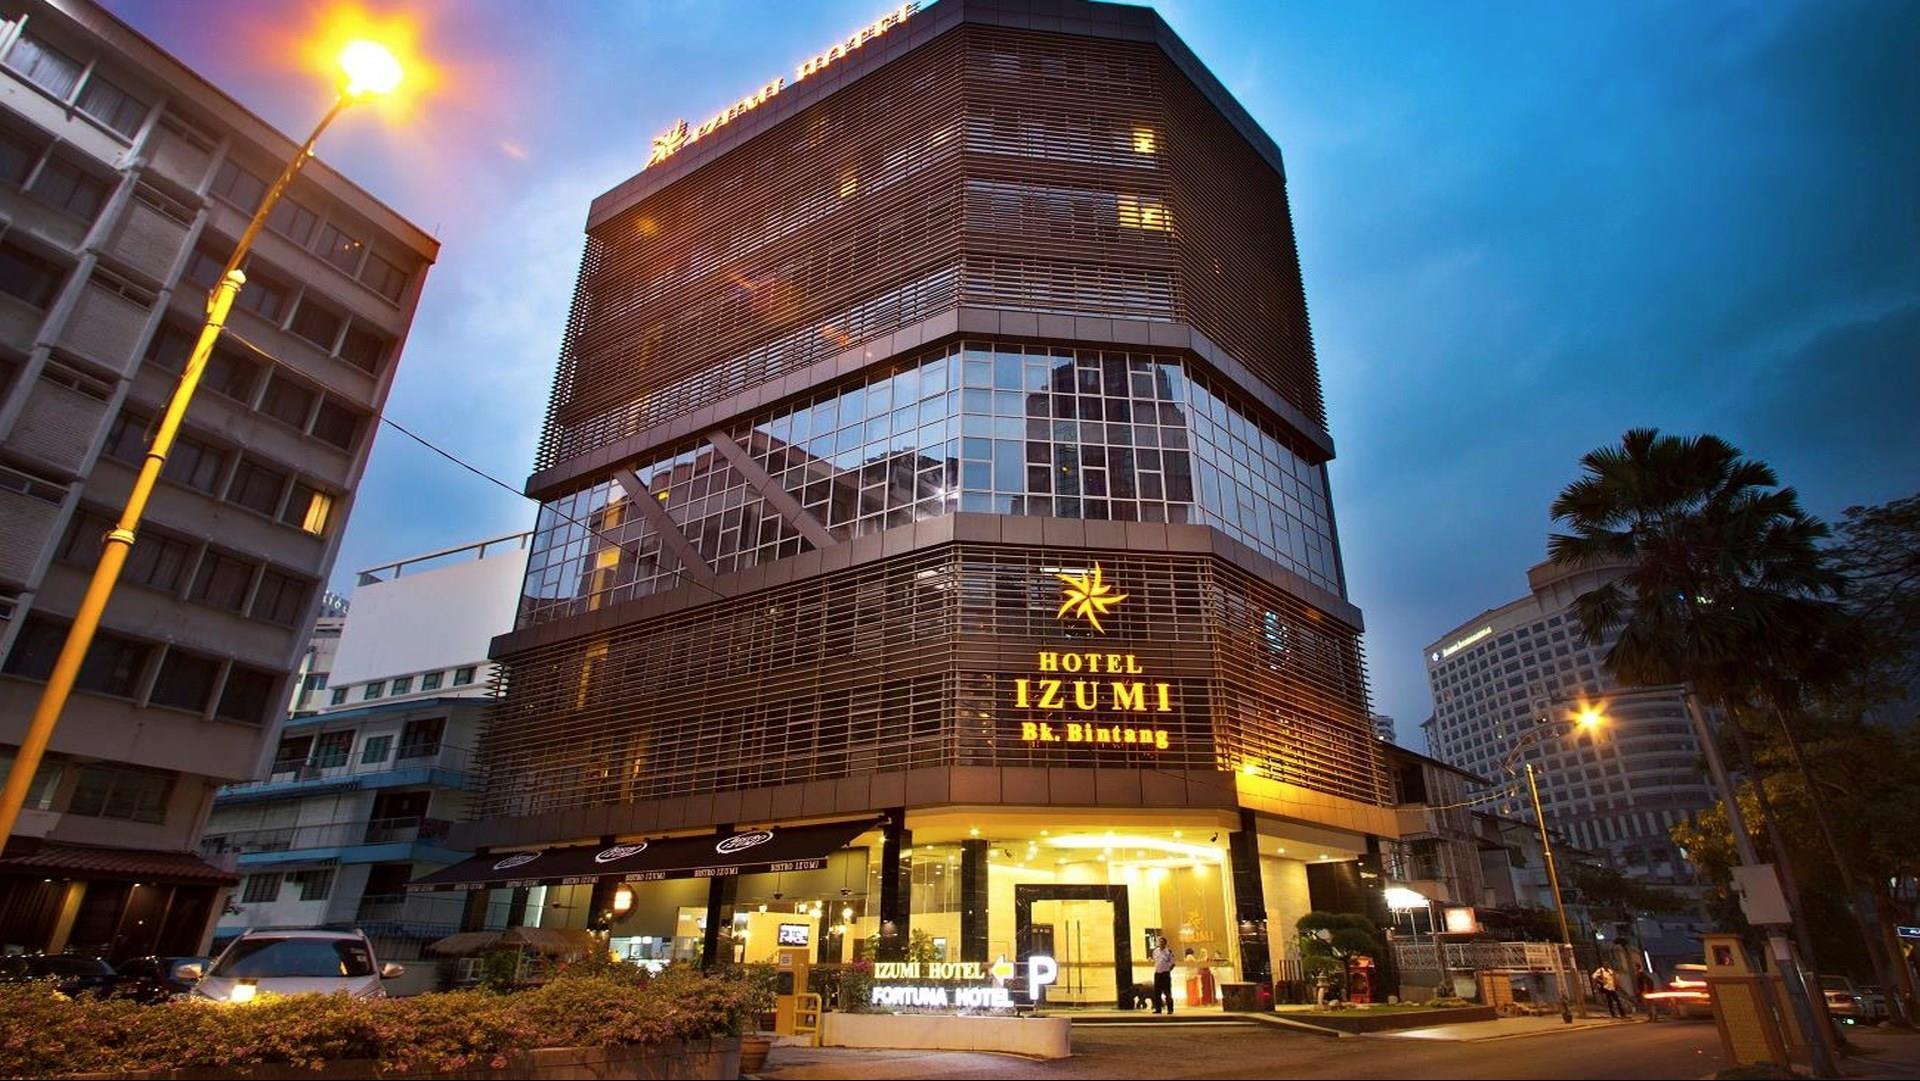 Izumi Hotel Bukit Bintang in Kuala Lumpur, MY